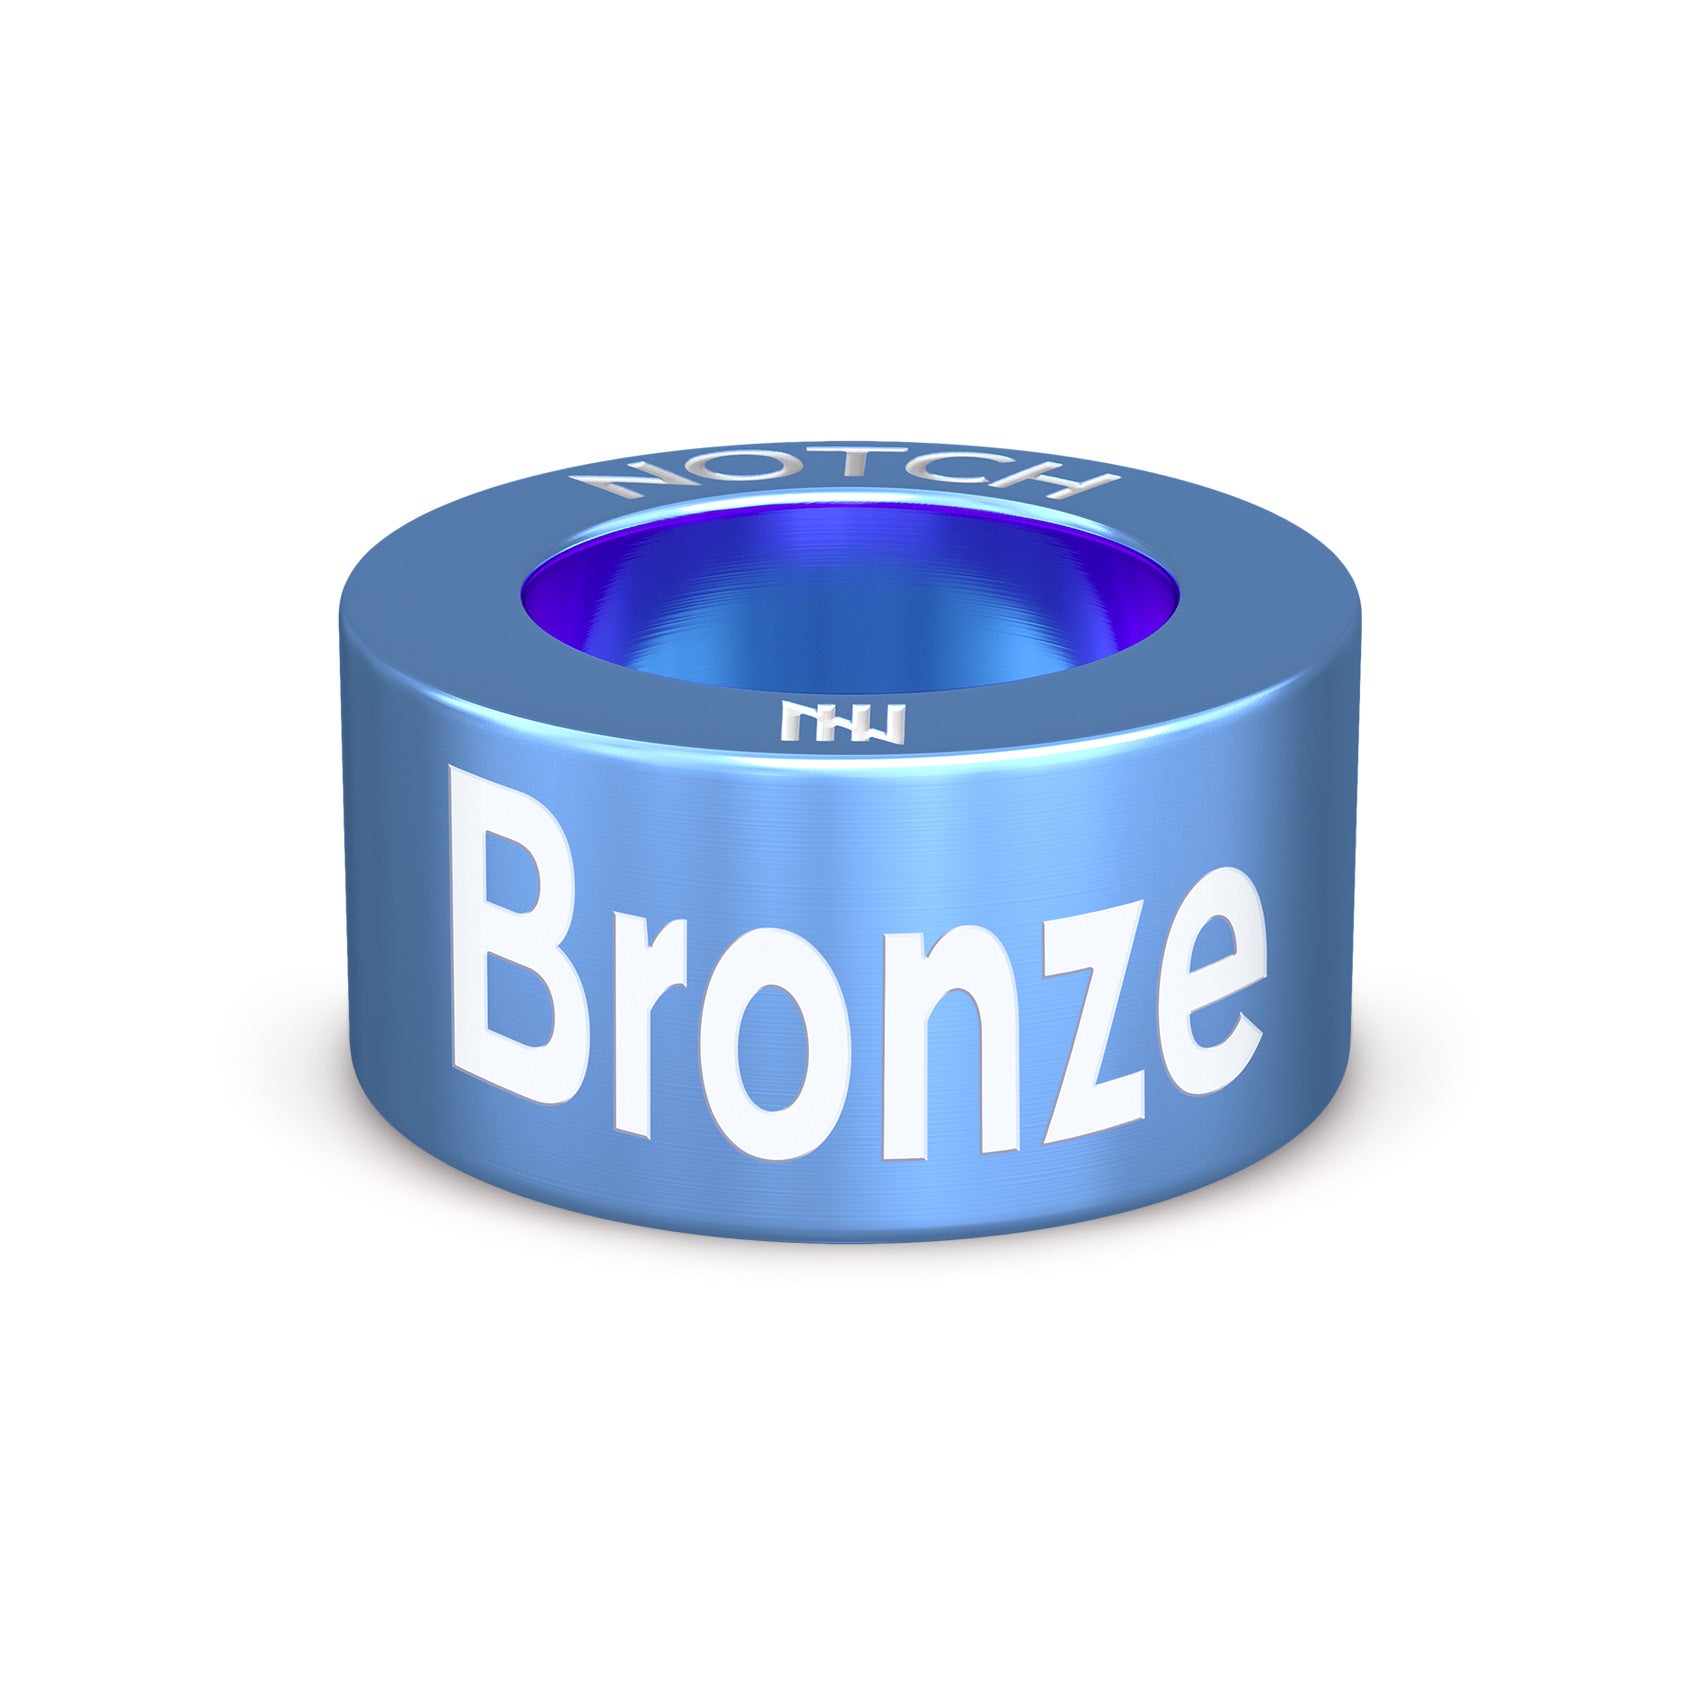 Bronze Award NOTCH Charm